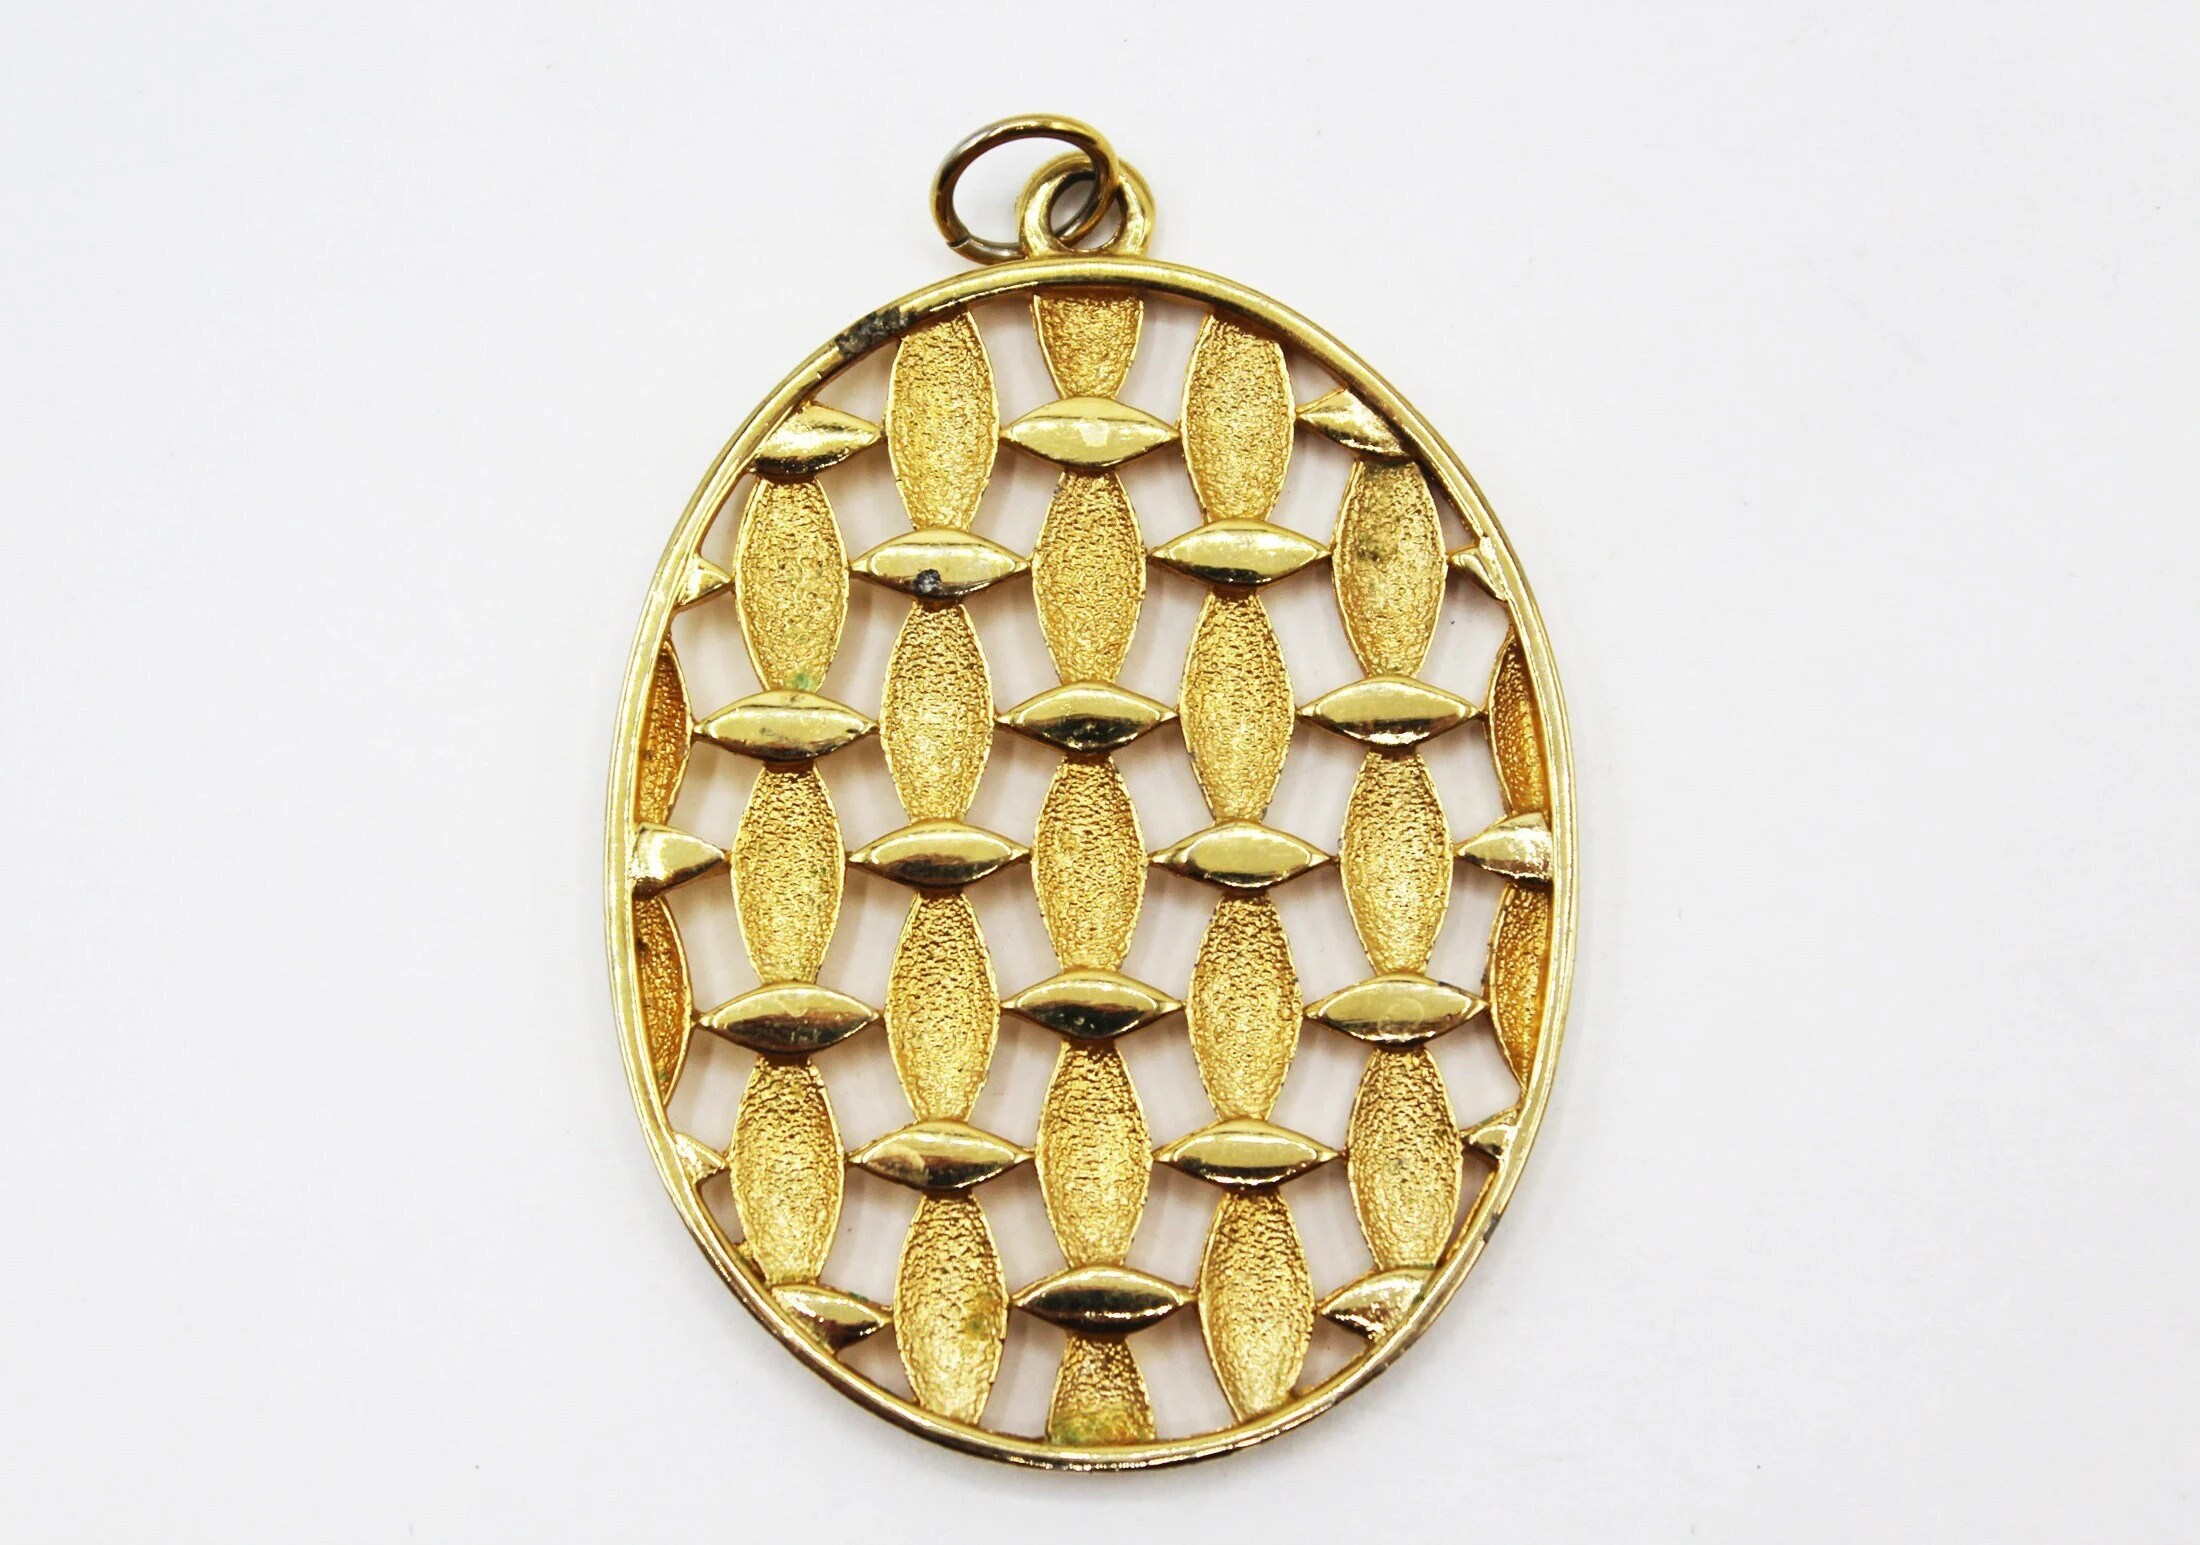 2.5" Vintage Large Chunky MCM Gold Tone Op Art Geometric Pendant Medallion - Retro, Mid Century, Costume Jewelry, Boho, Hippie, Mod